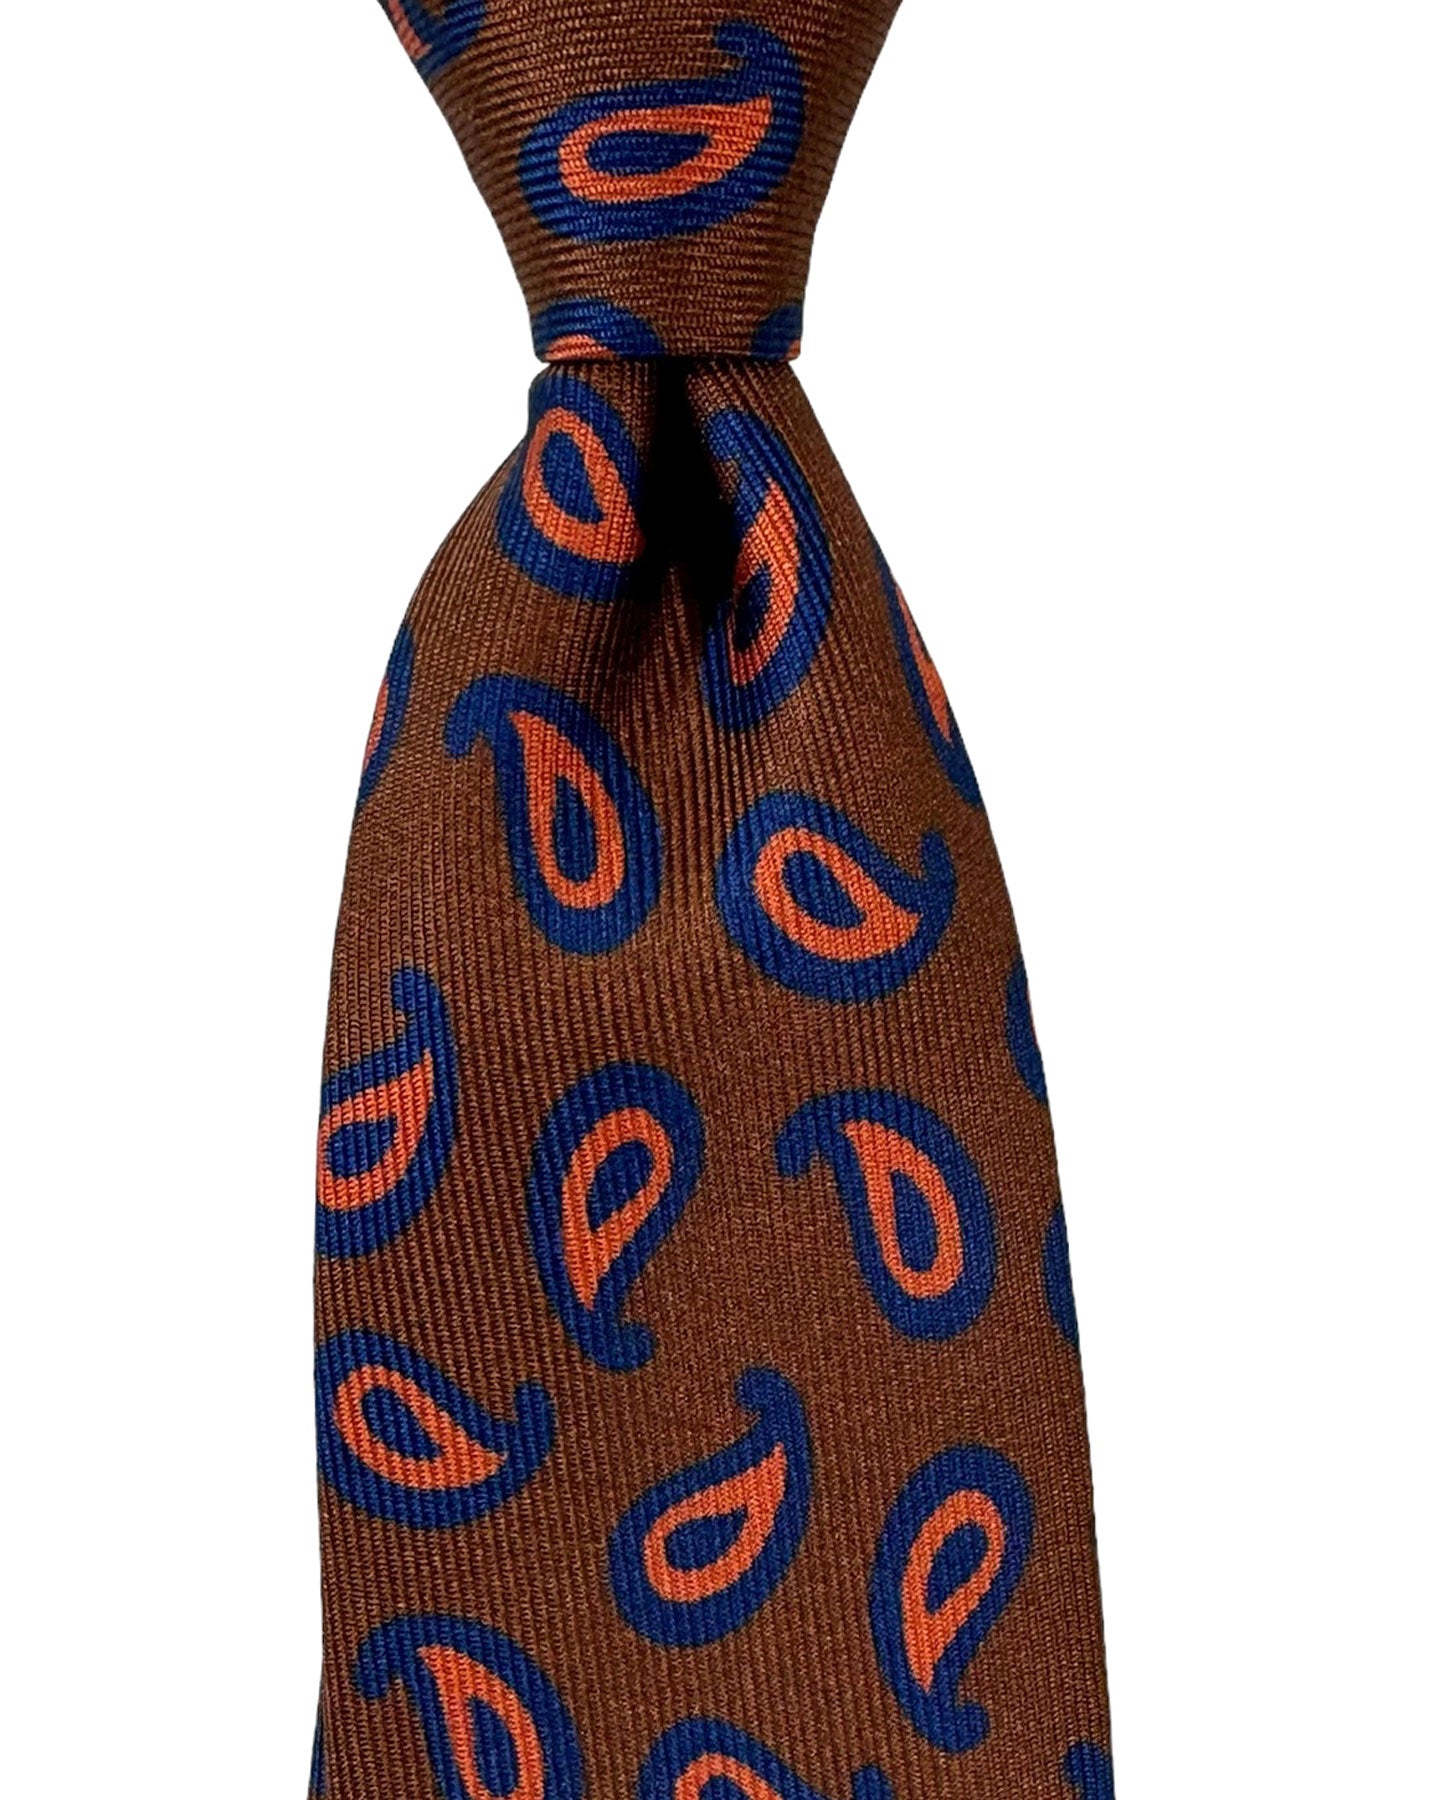 Barba Sevenfold Tie Brown Navy Orange Paisley Design - Sartorial Neckwear